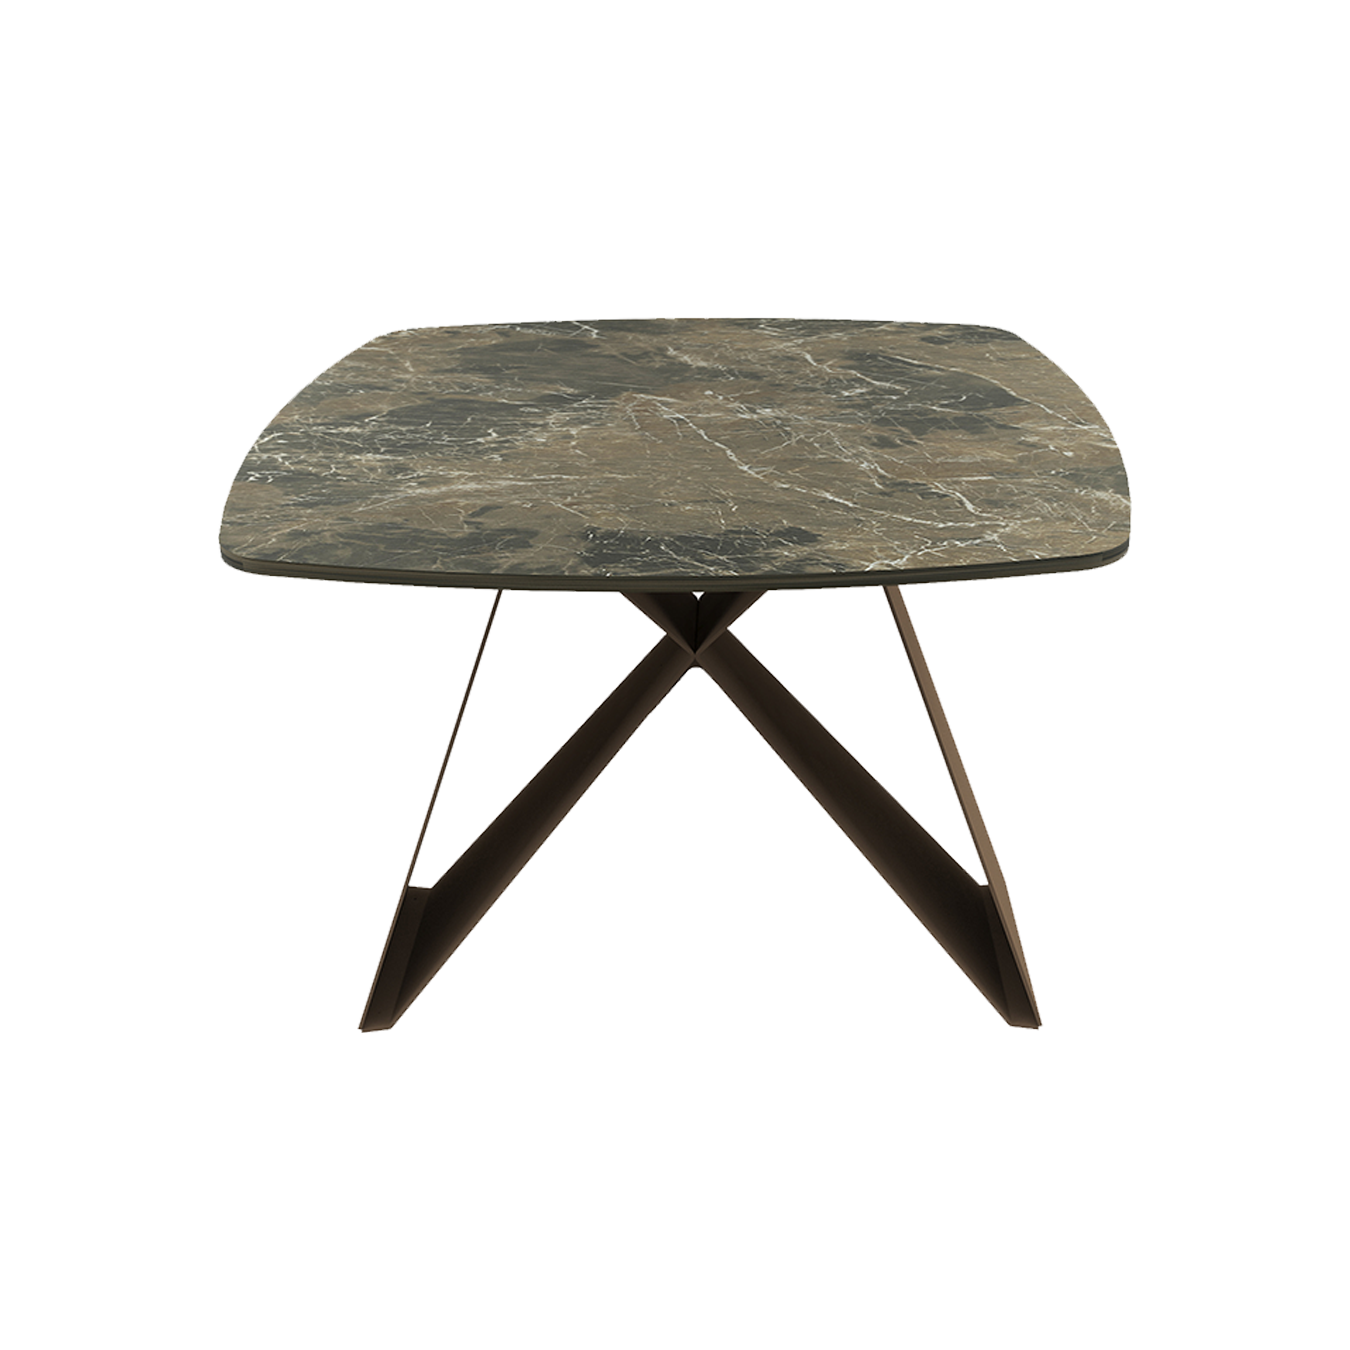 Settle Lamp Table | Ceramic